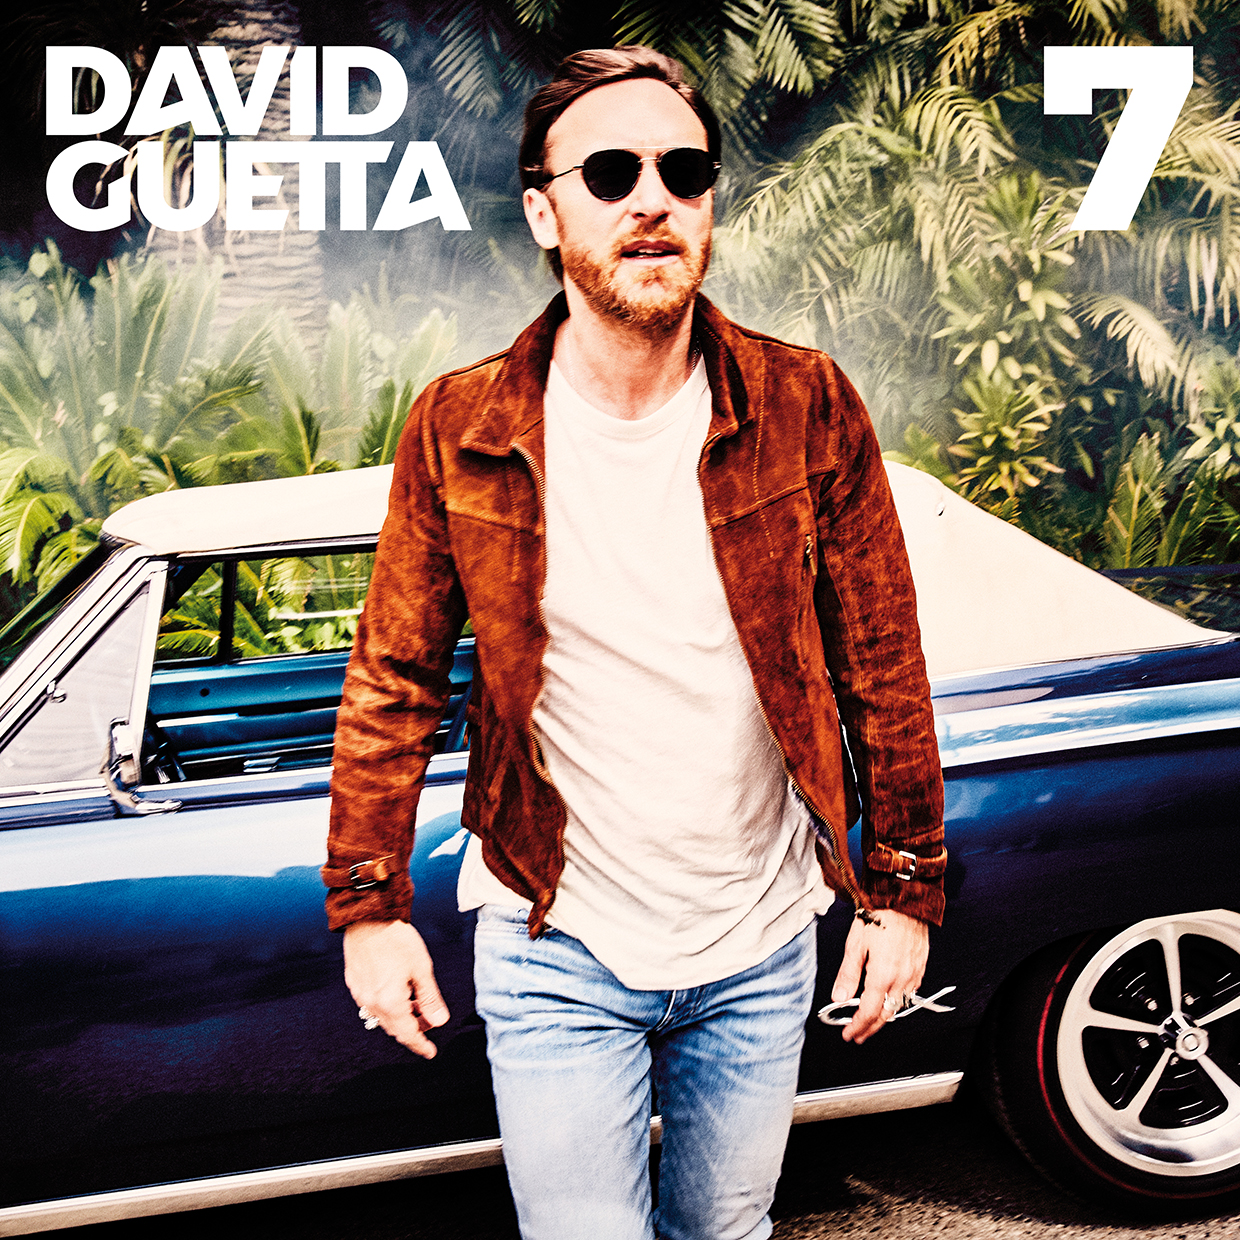 david-guetta-7-album-2018-billboard-embed.jpg